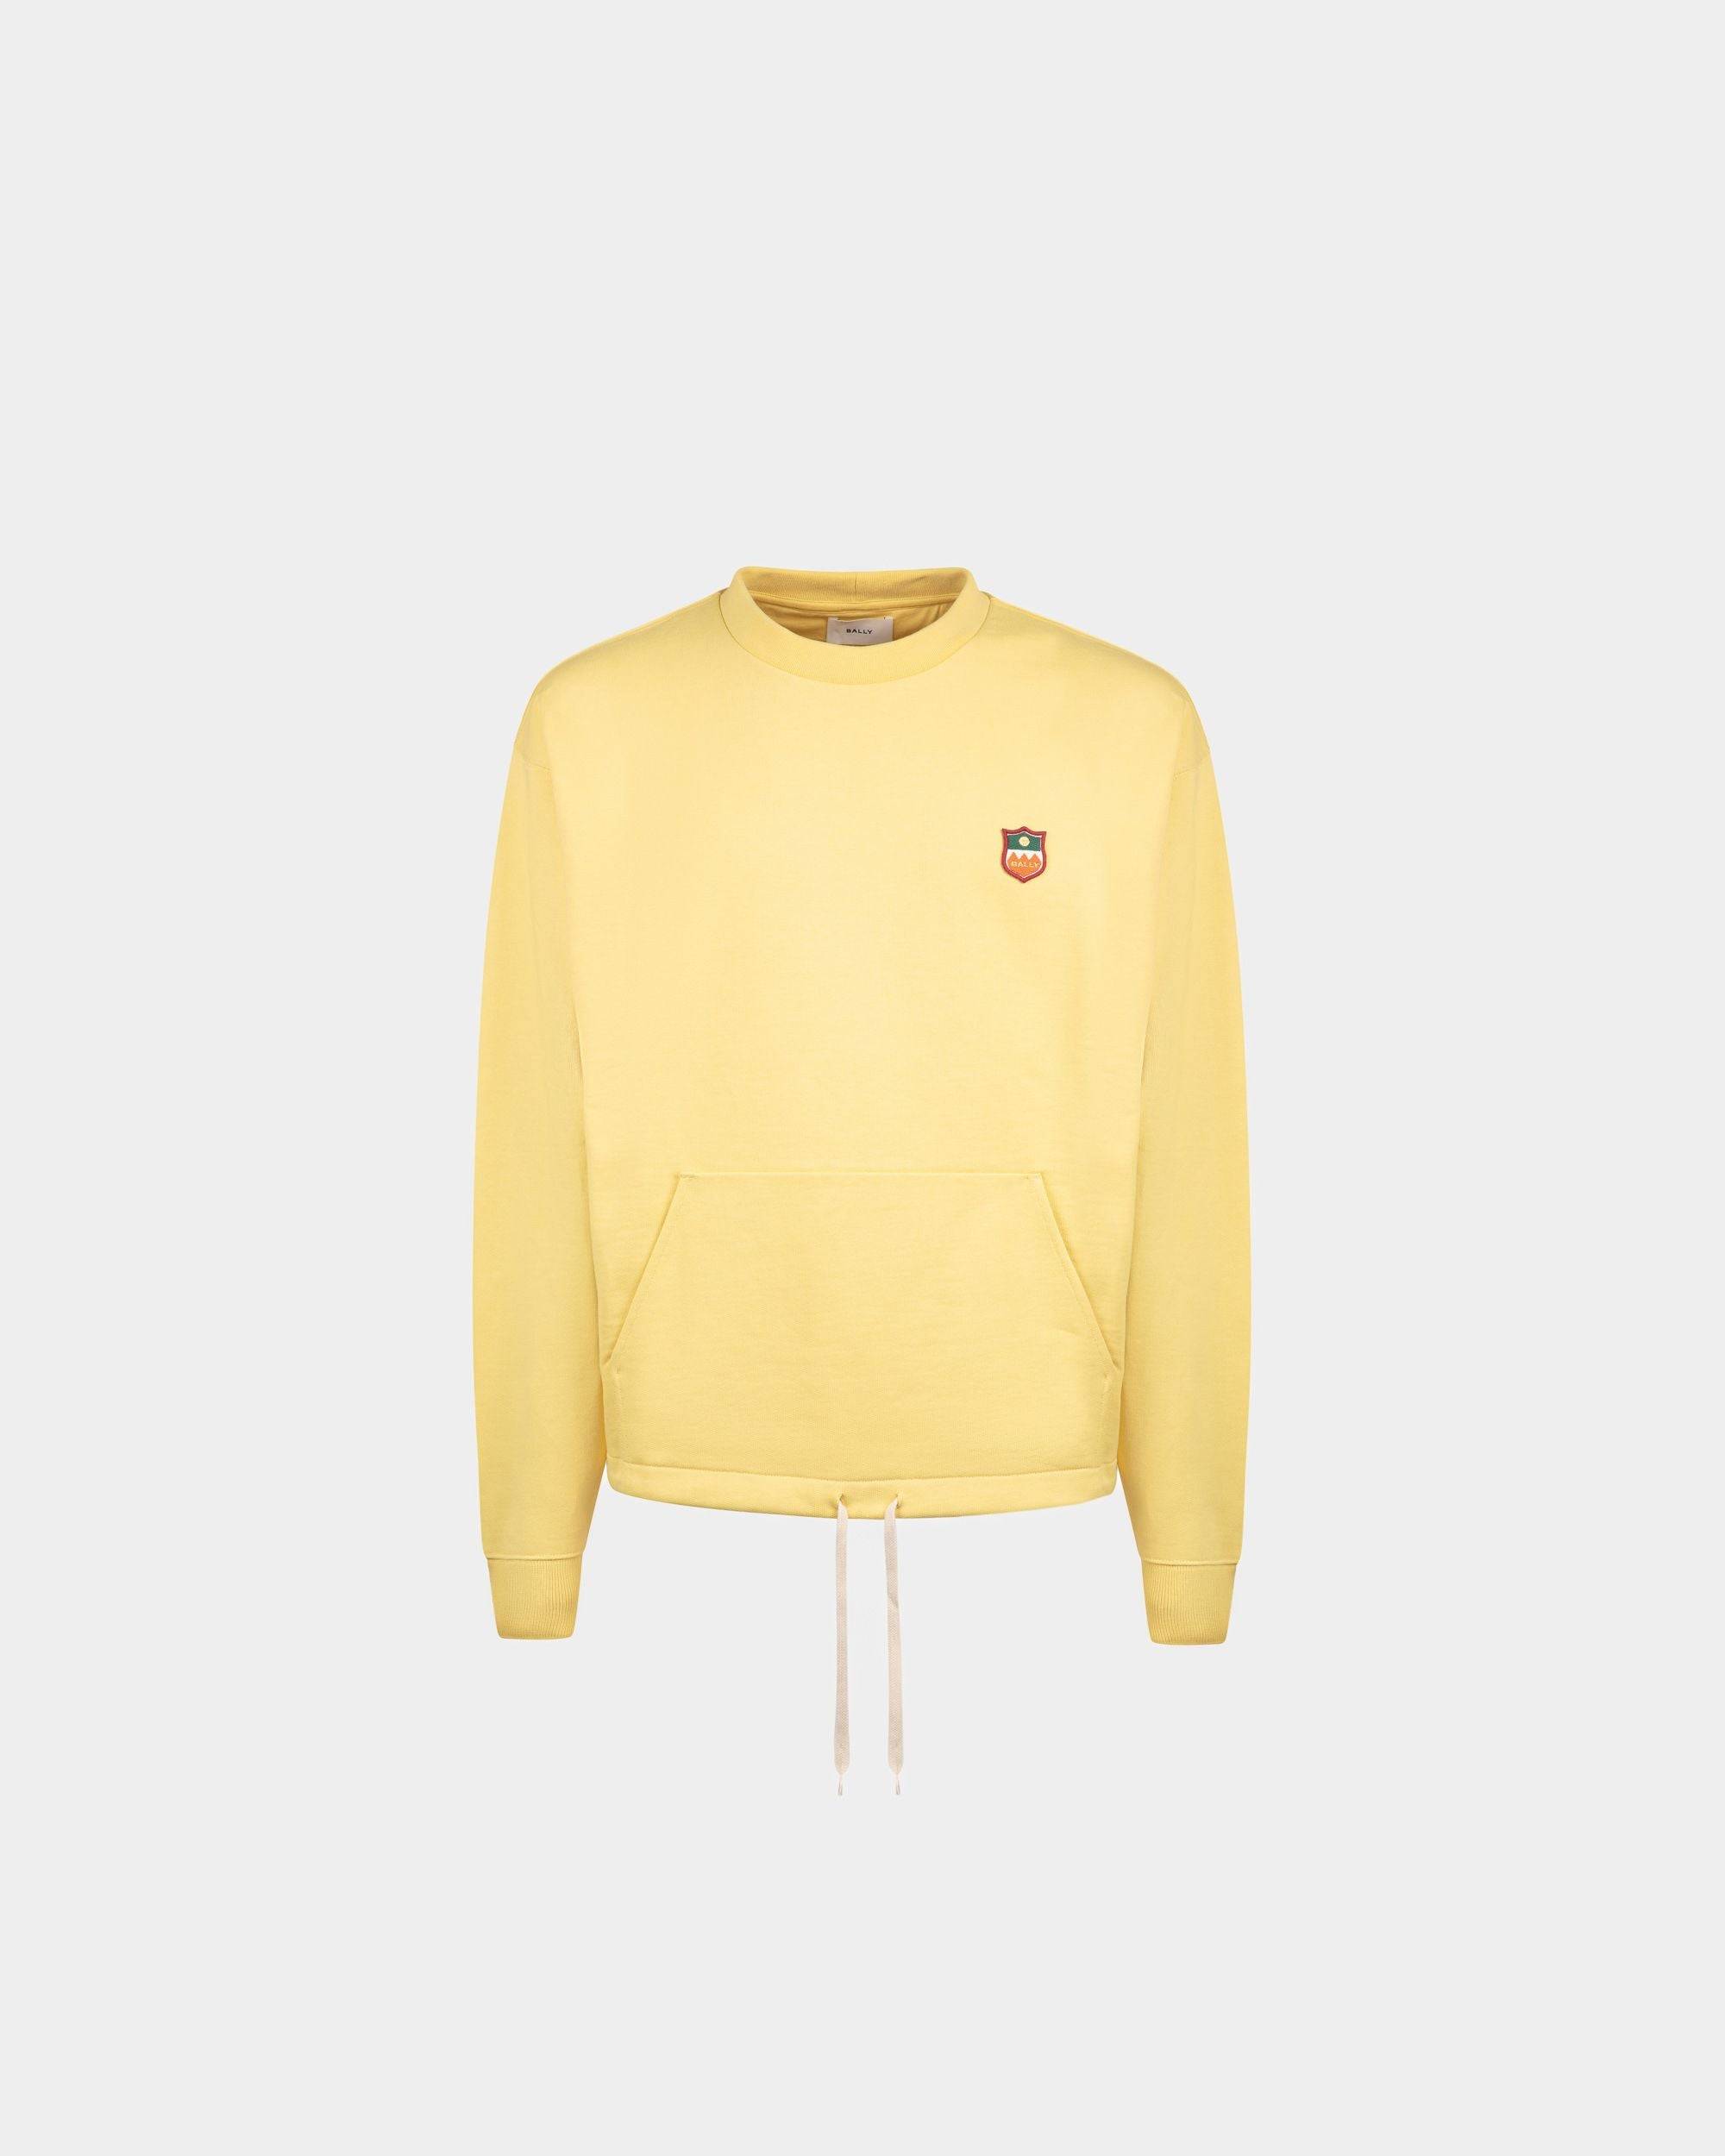 Men's Sweatshirt in Yellow Cotton | Bally | Still Life Front